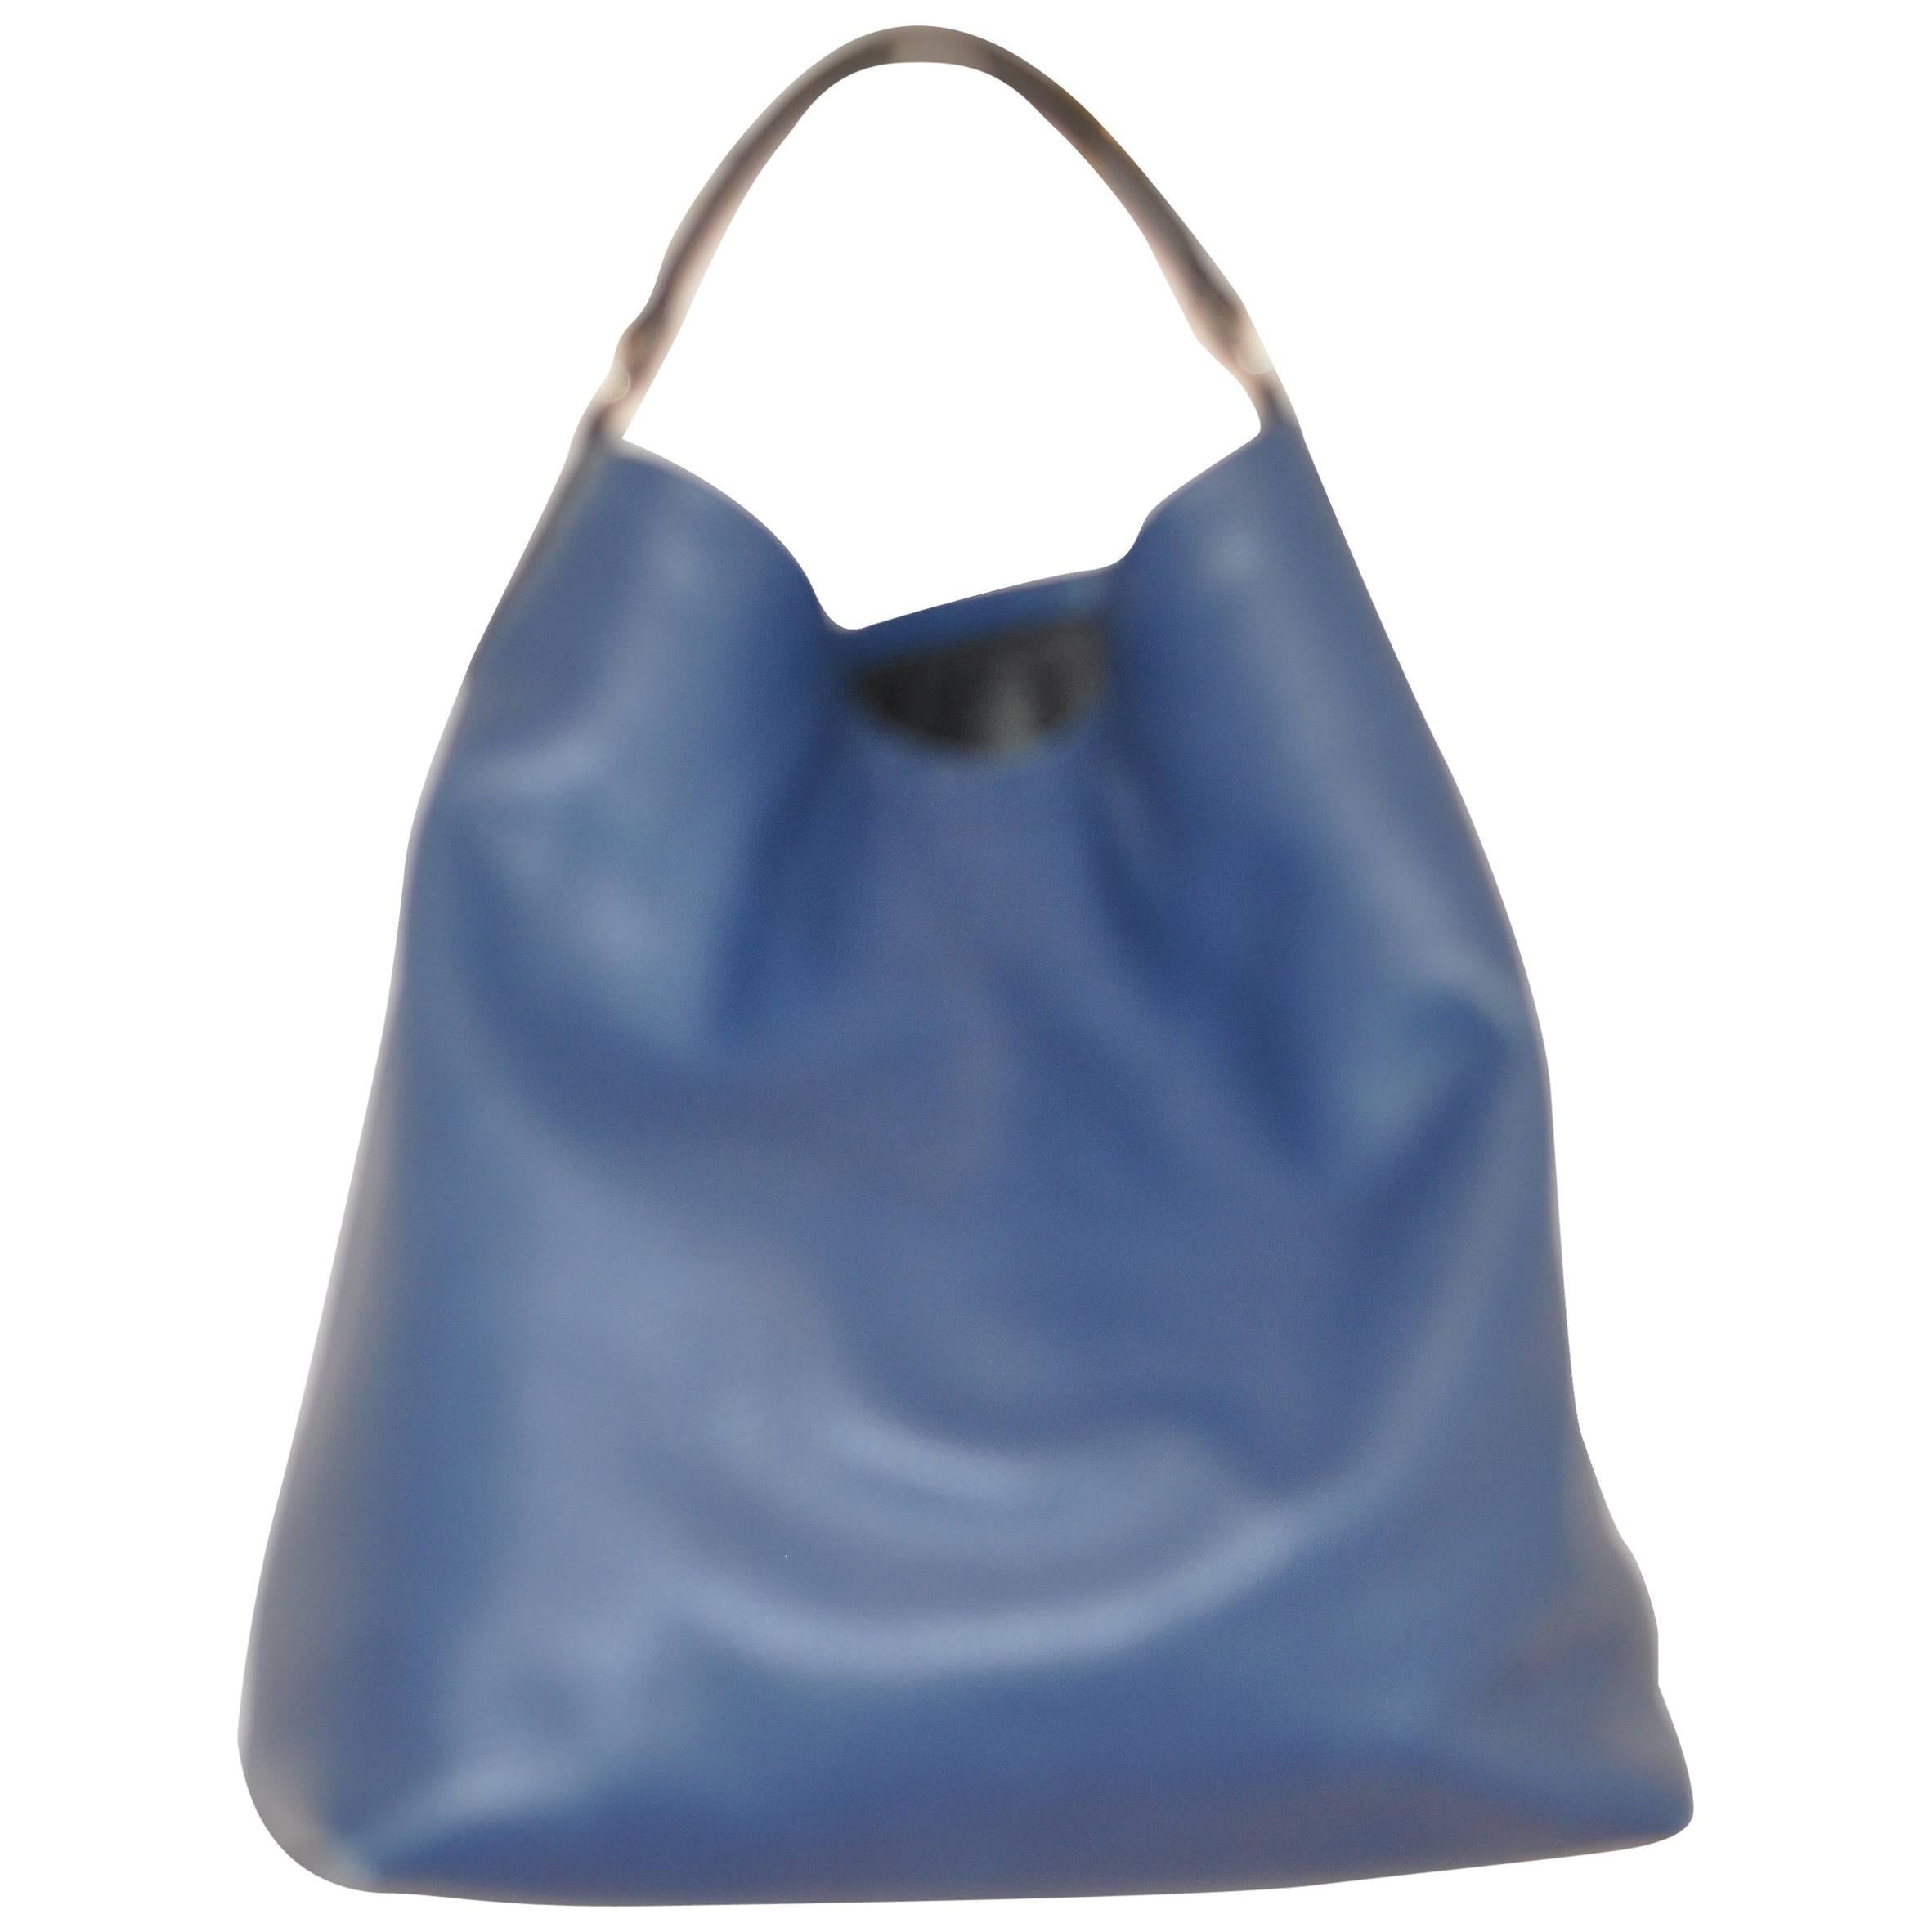 Proenza Schouler Blue Pebbled Leather Hobo Bag